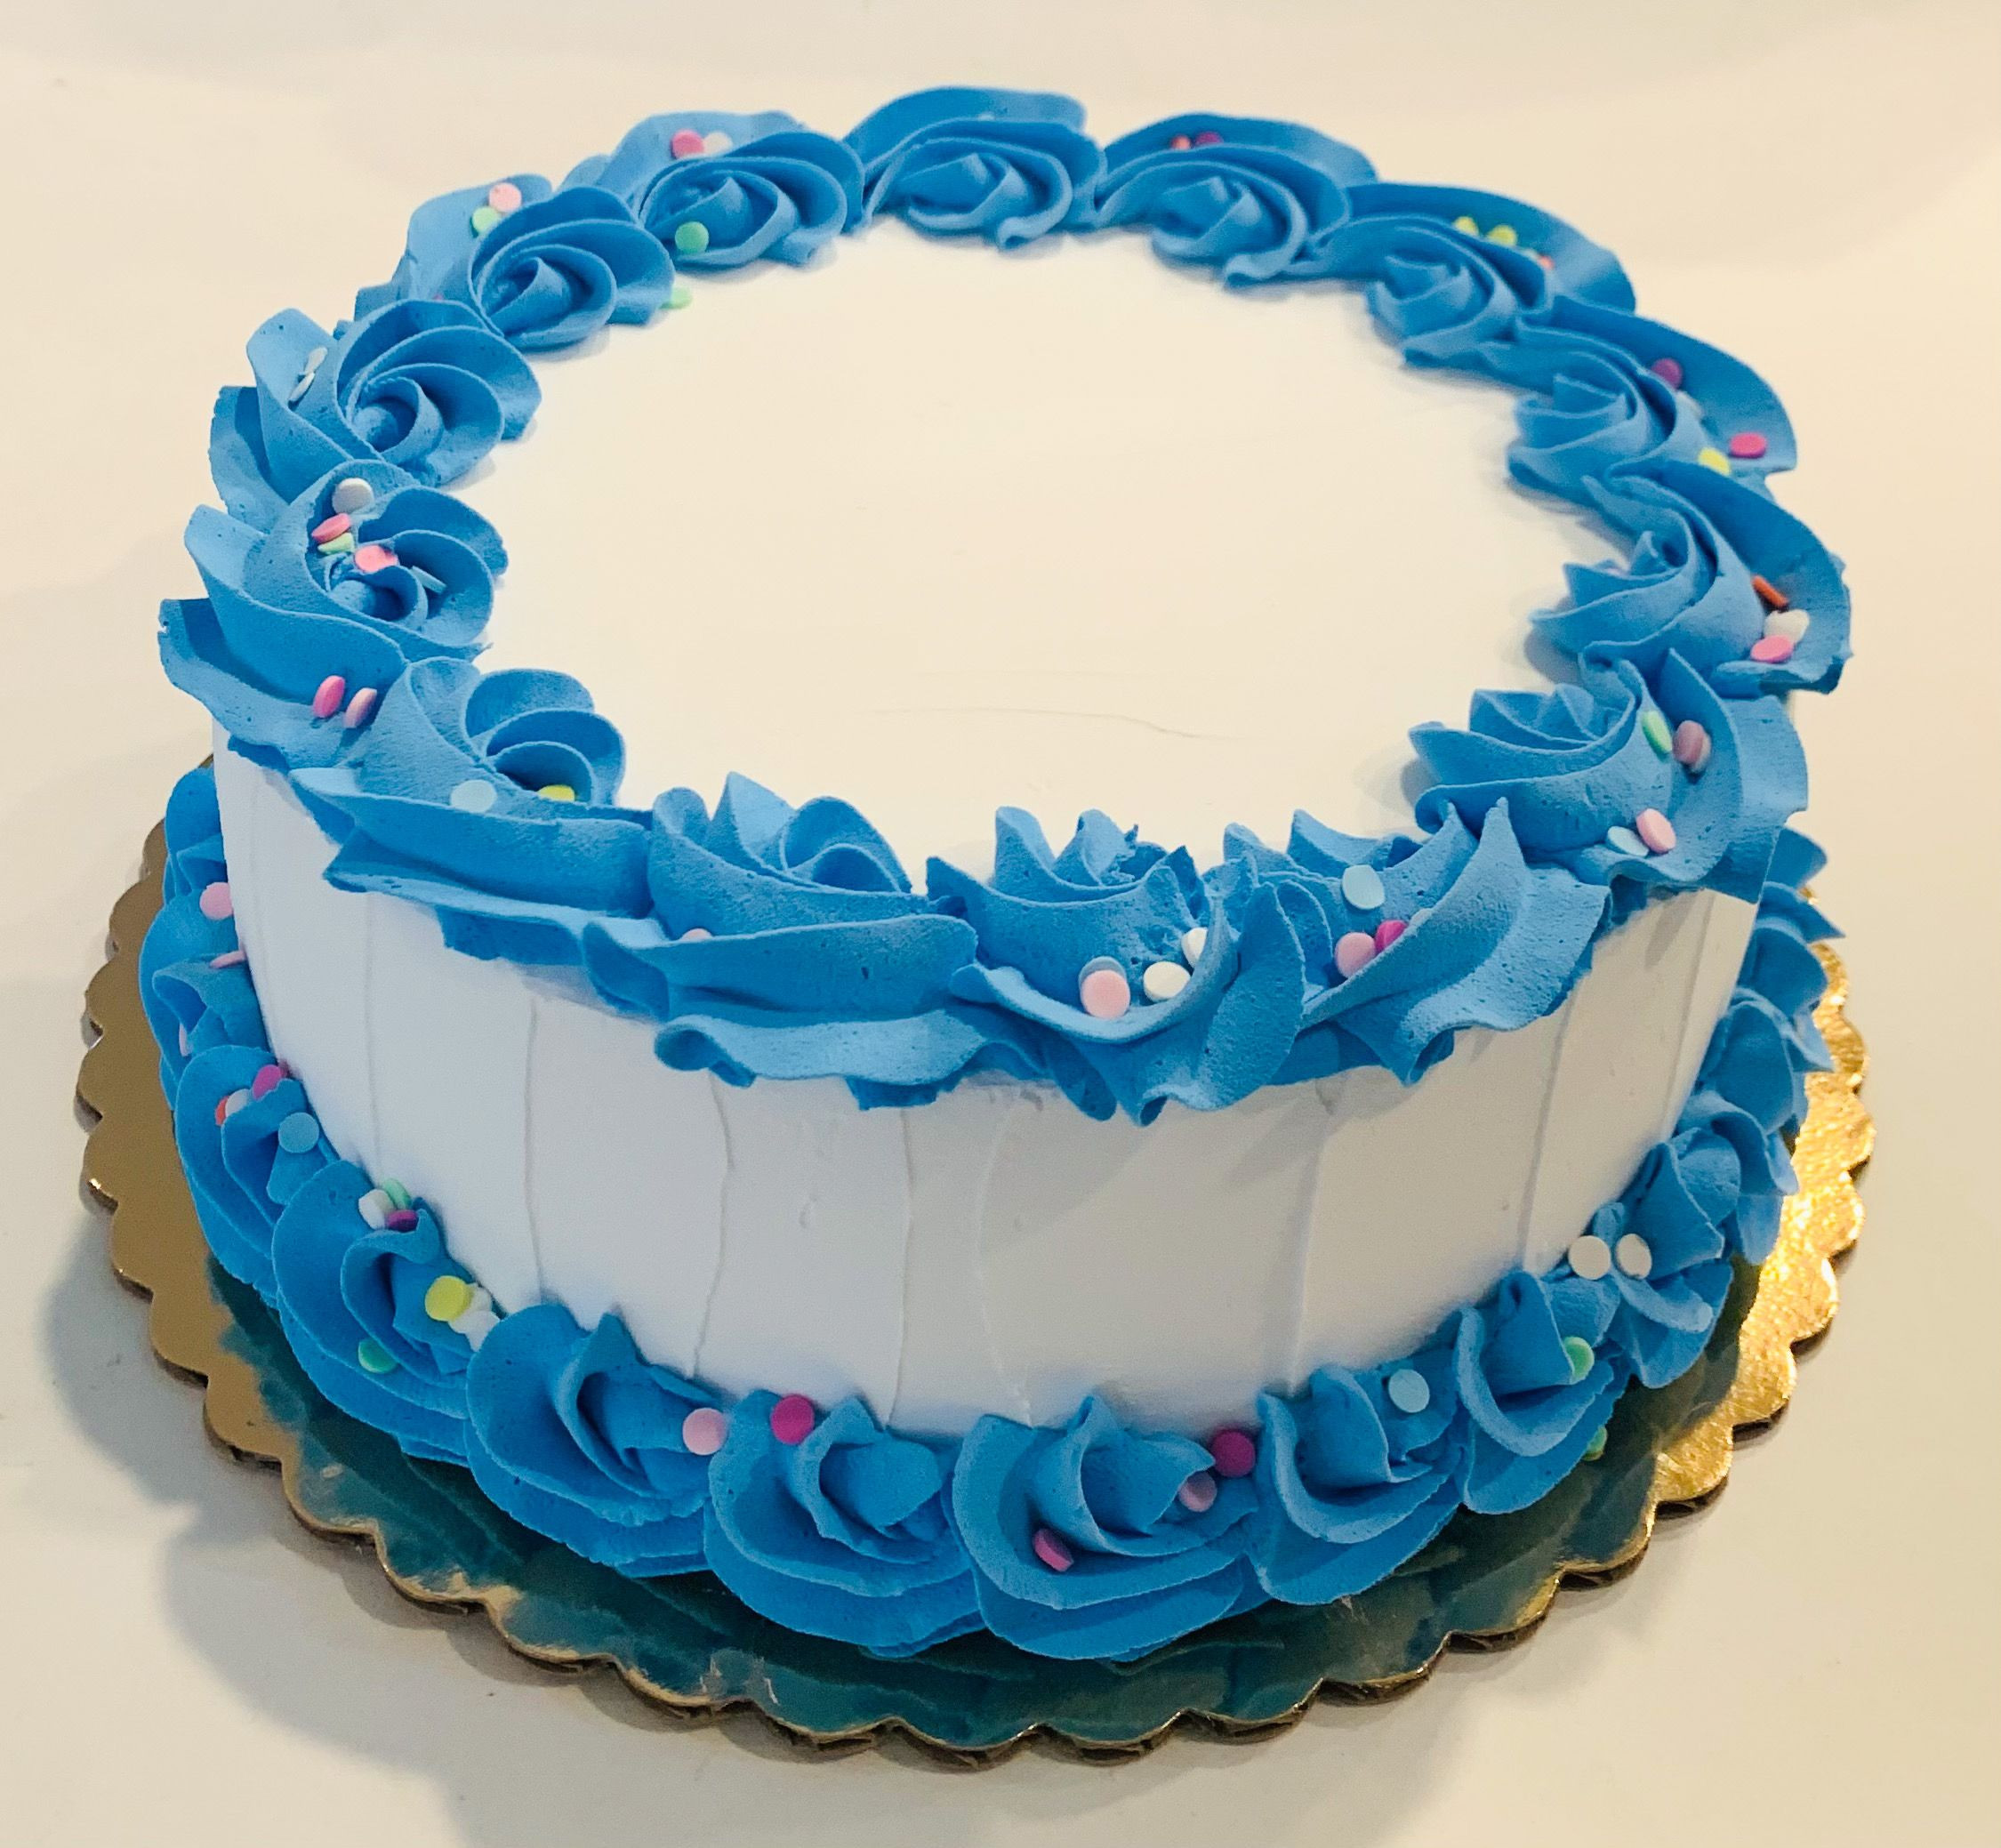 15 Amazing Blue Birthday Cake